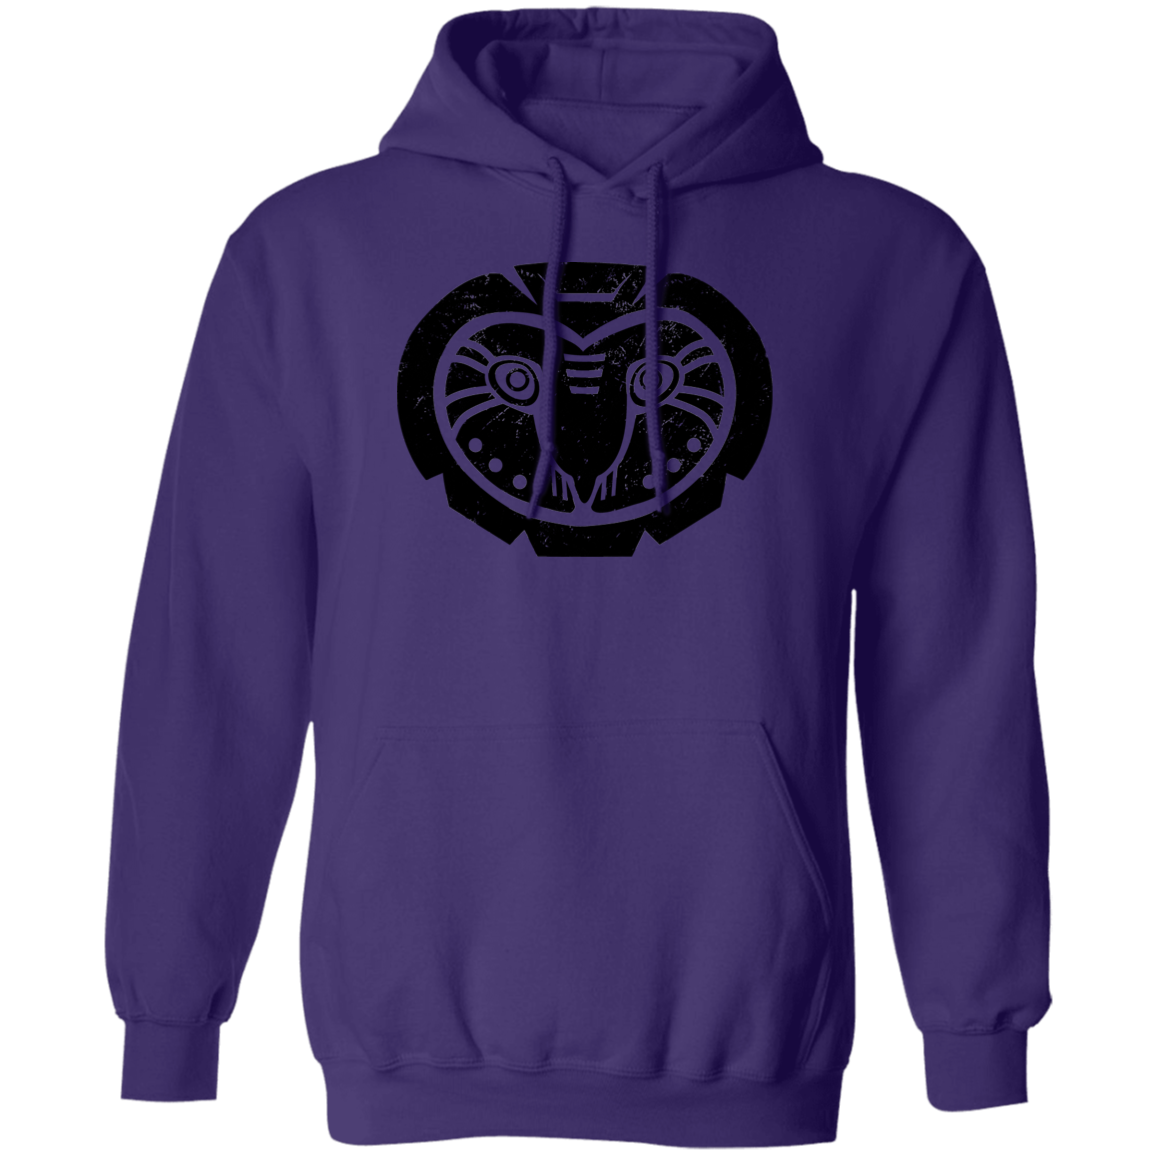 Black Distressed Emblem Hoodies for Adults (Barn Owl/Grim)